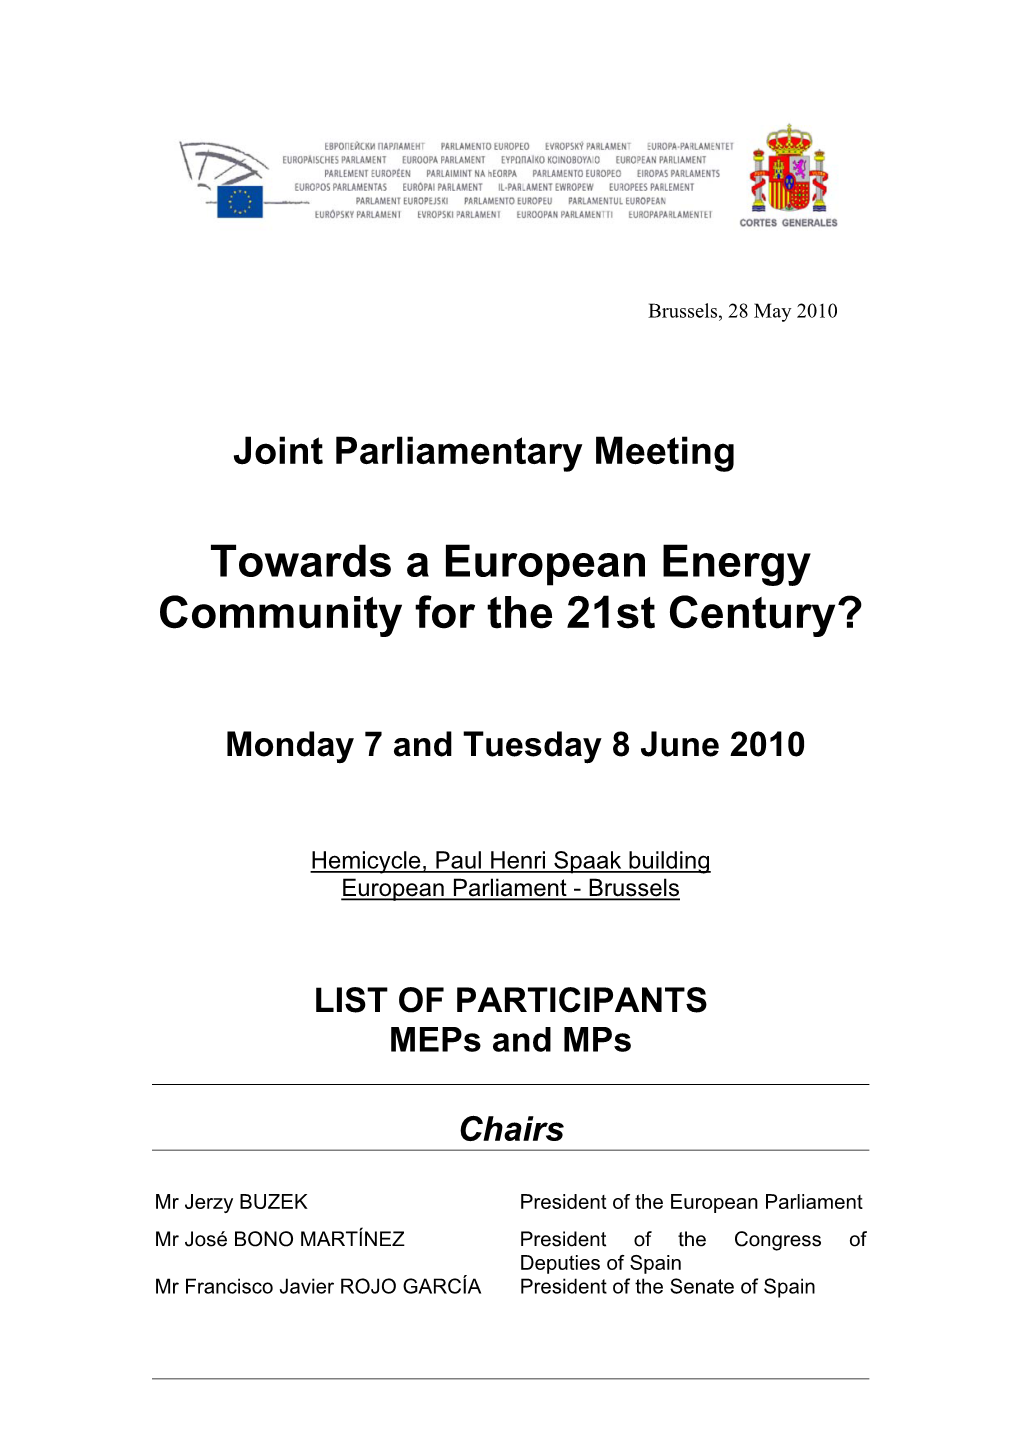 Towards a European Energy Community for the 21St Century?